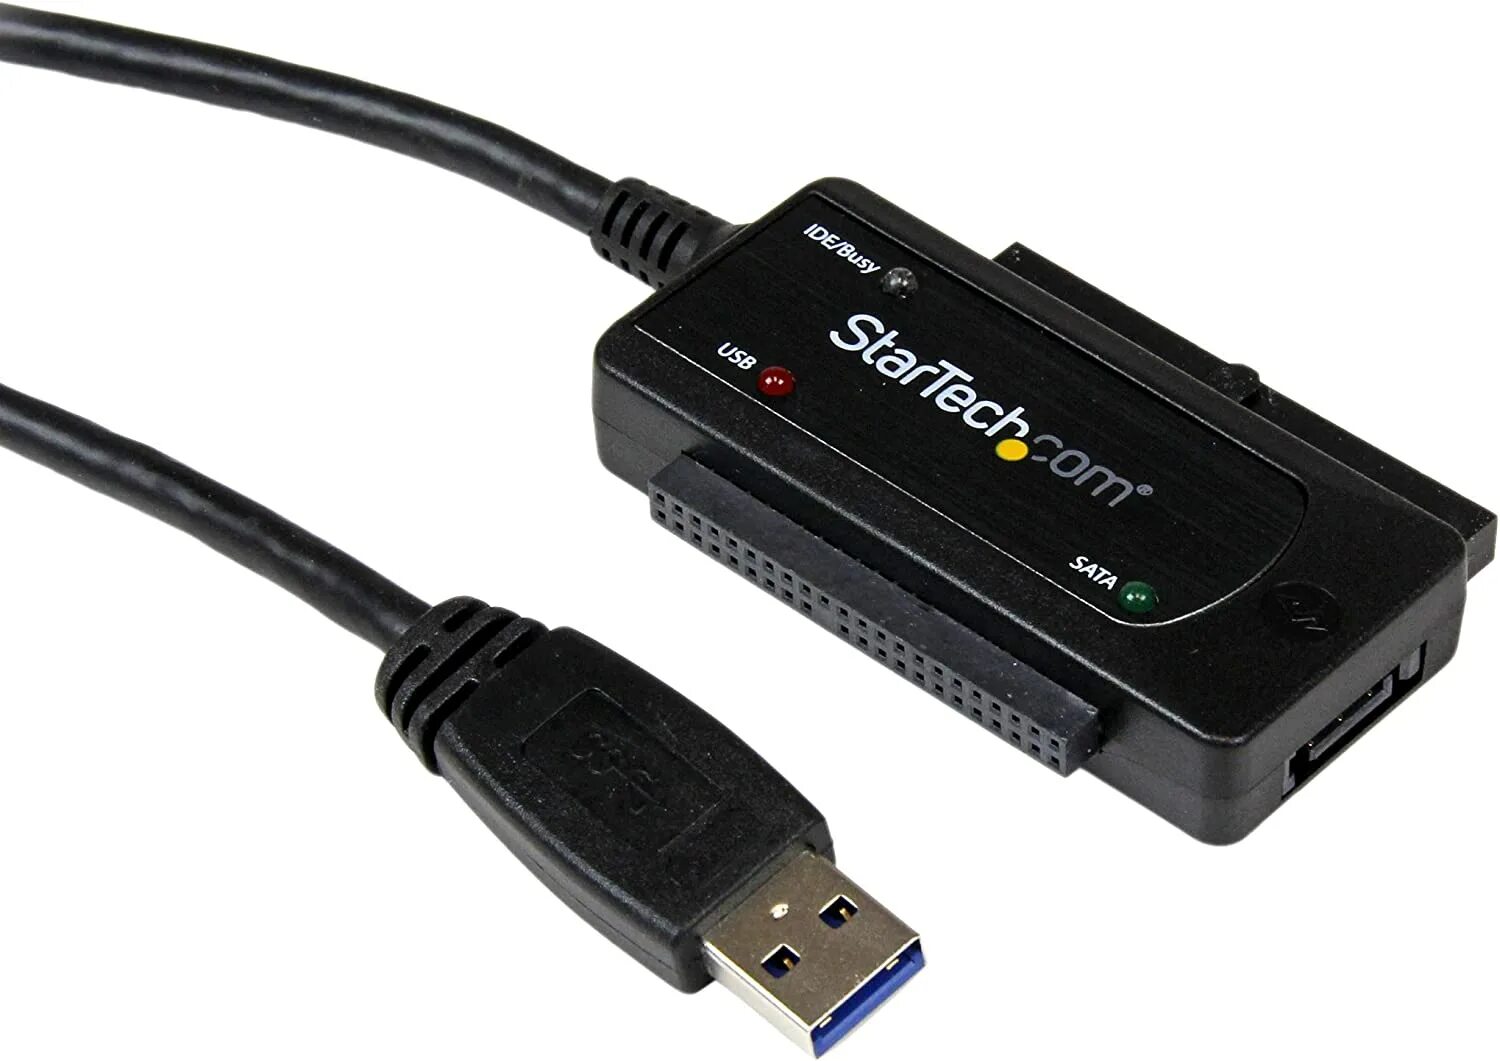 Купить адаптер для жесткого. Адаптер KS-is SATA/Pata/ide USB 3.0. USB3.0 SATA ide адаптер. USB3.1 SATA ide адаптер. Переходник SATA - USB 3.0/USB 2.0.